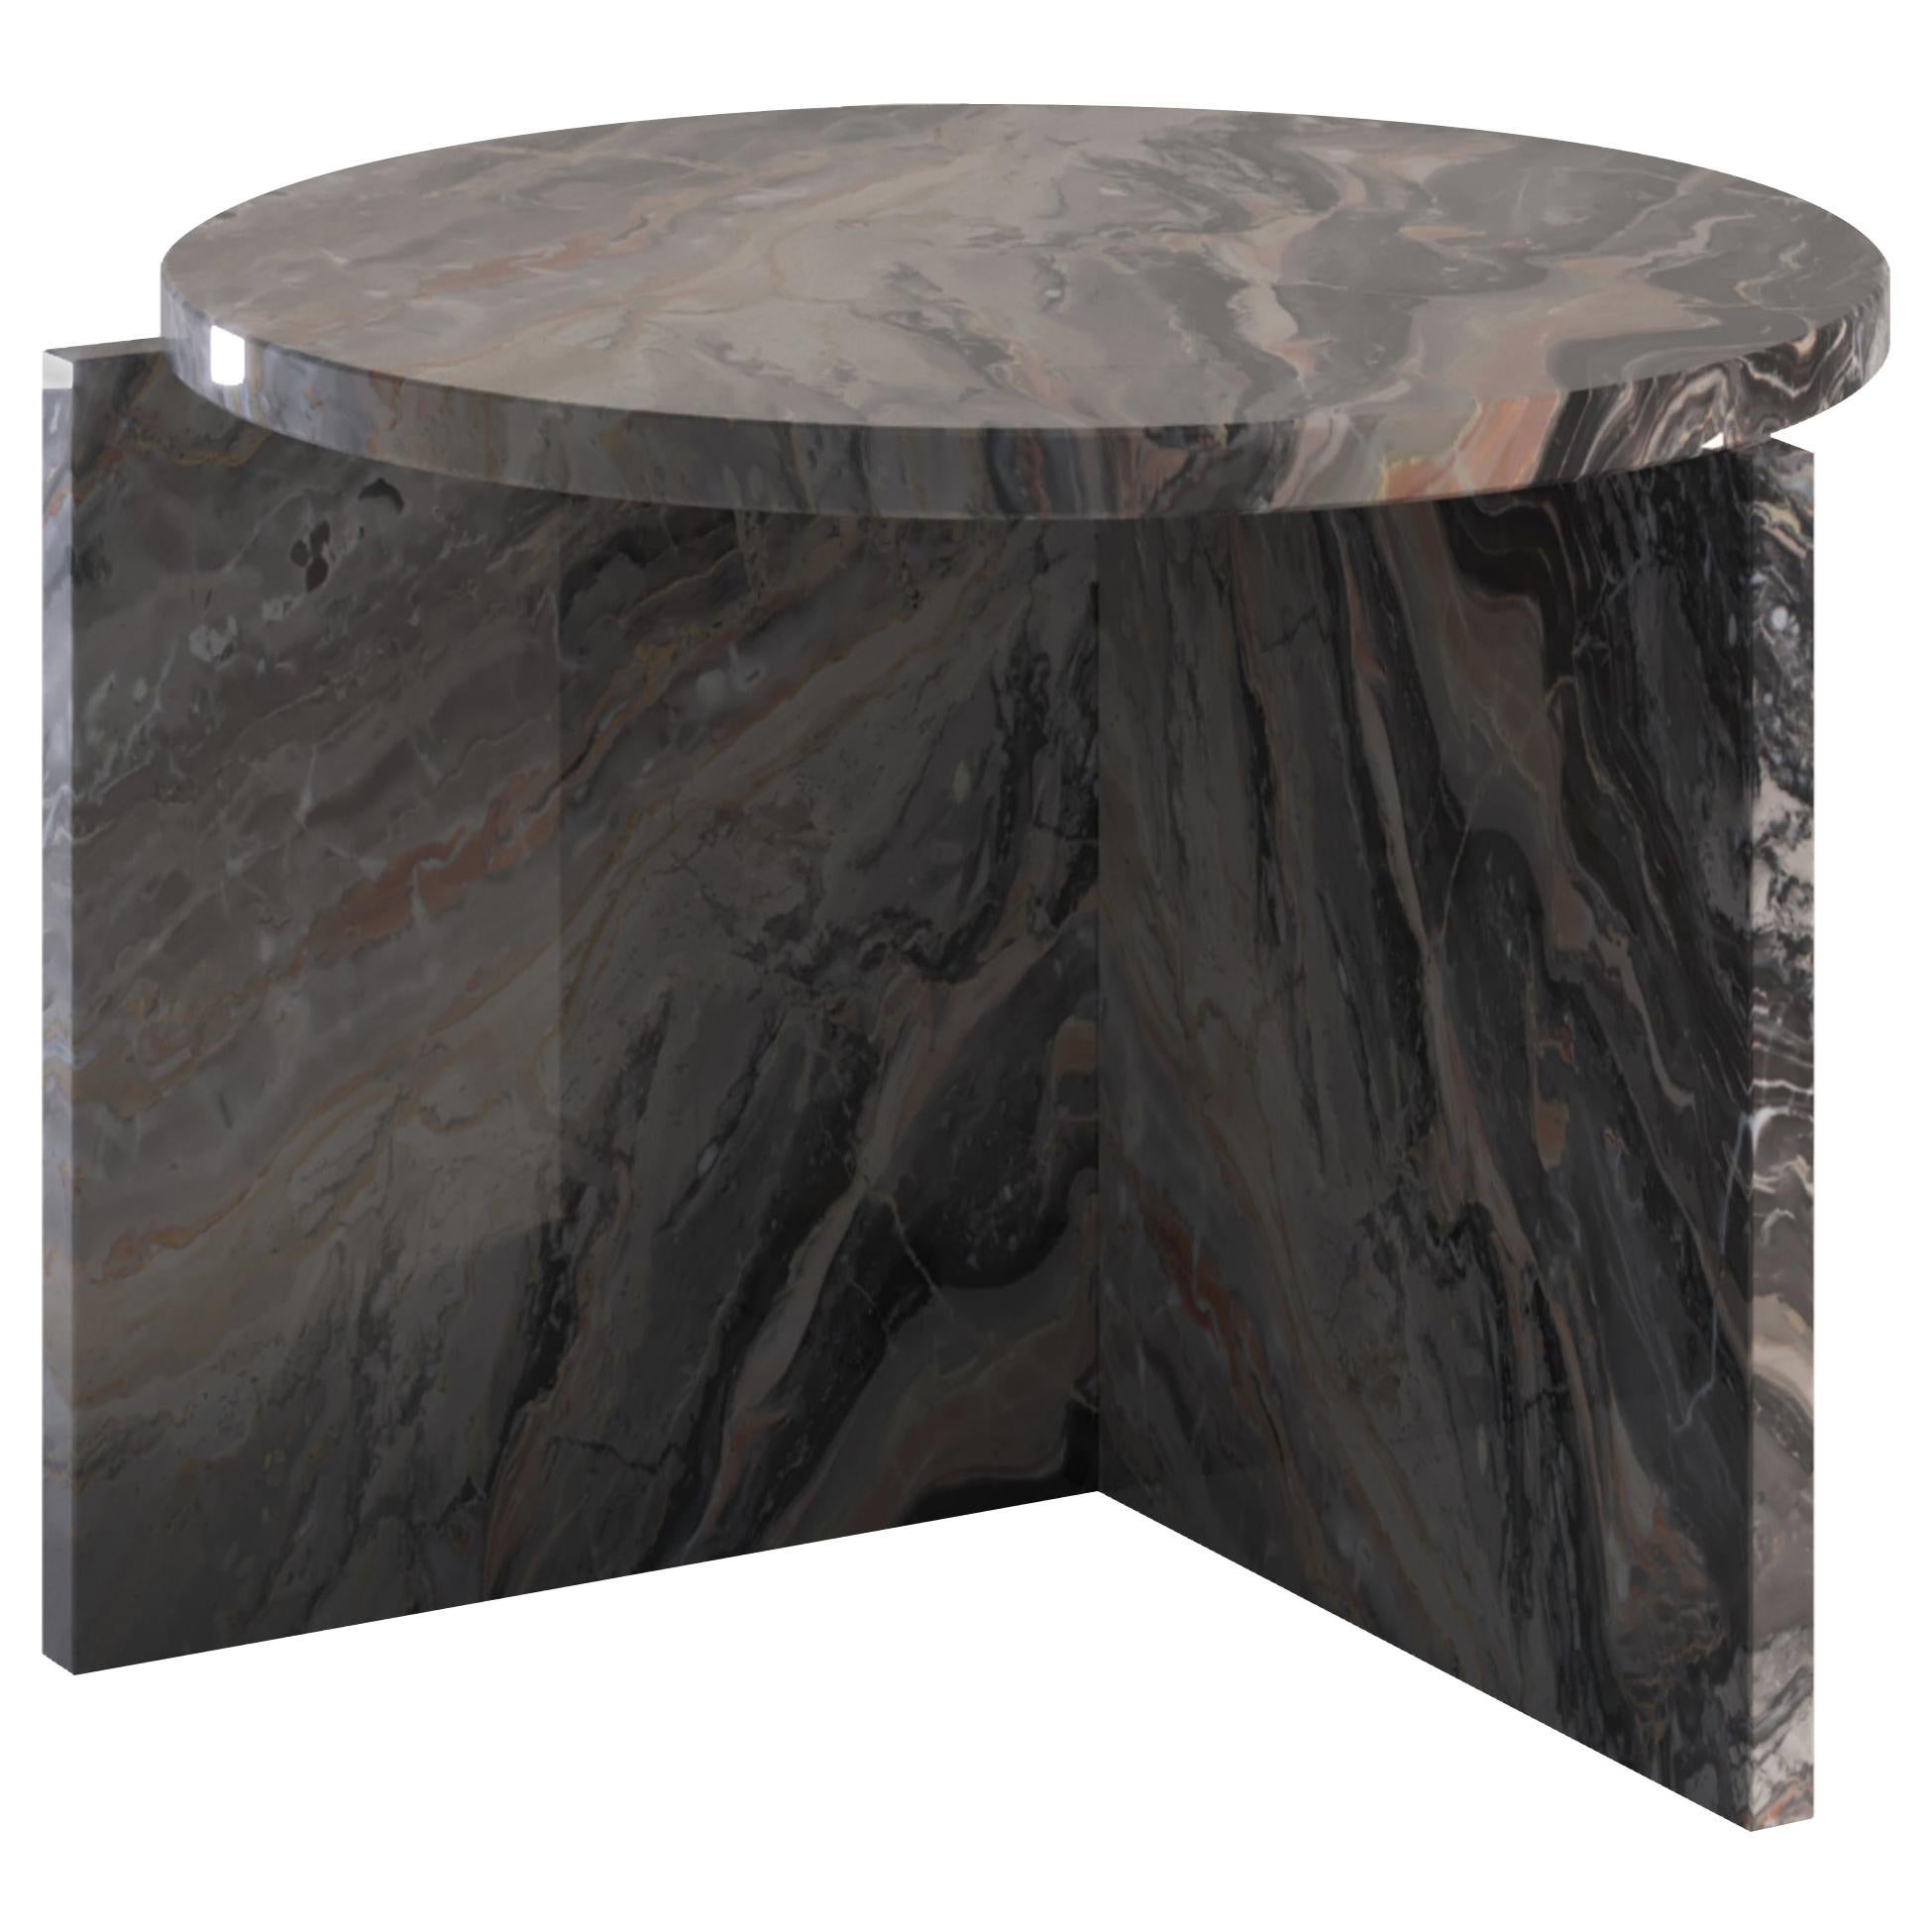 Origin Contemporary Side Table in Marble by Artefatto Design Studio